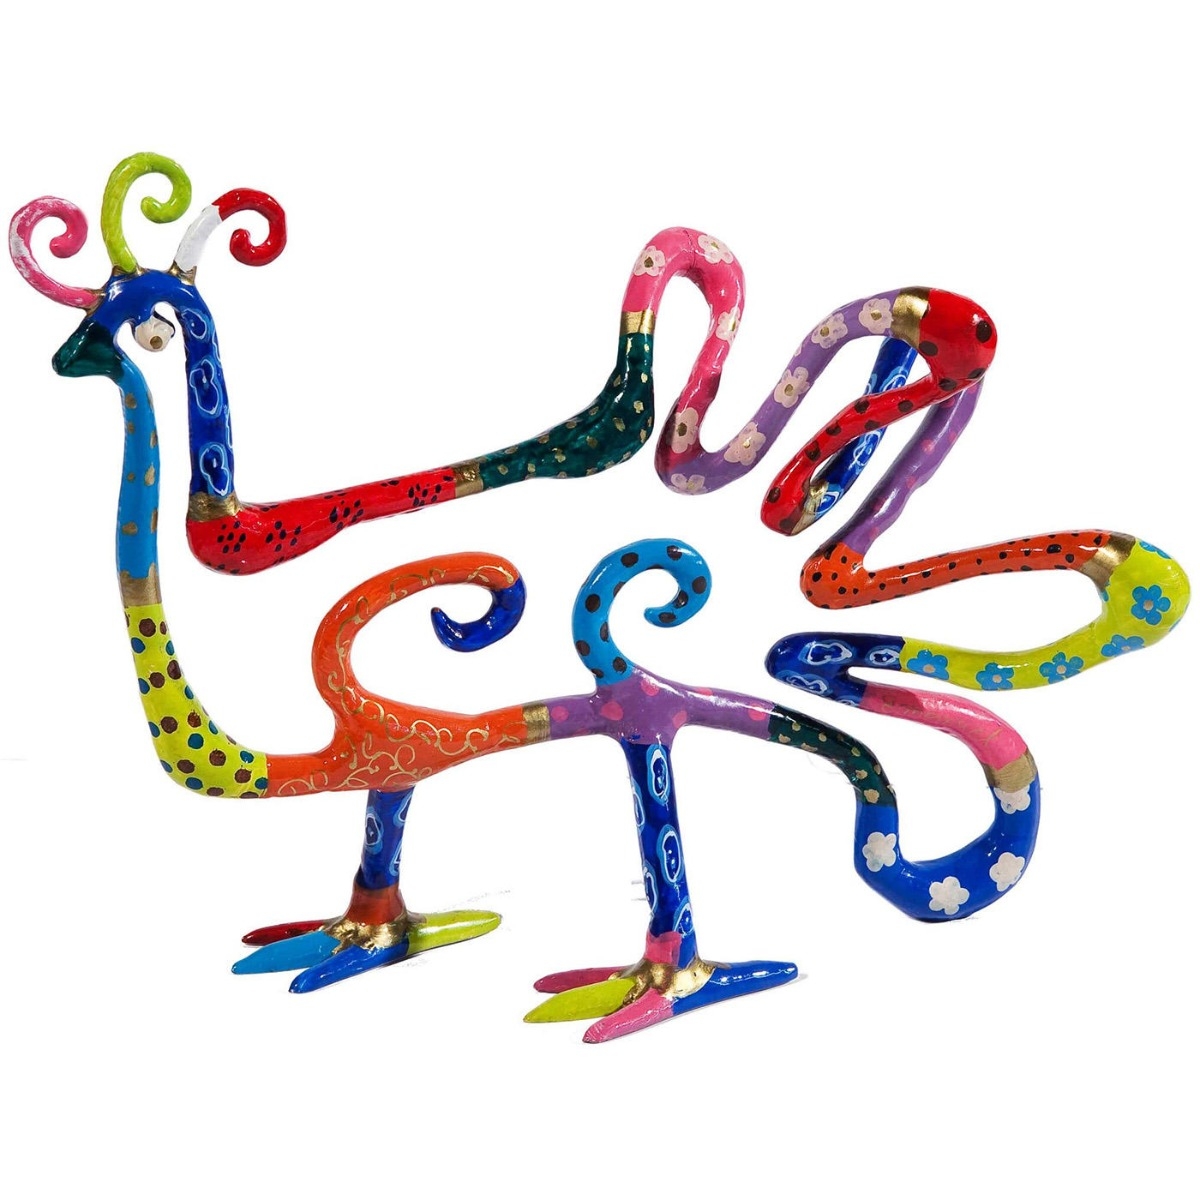 Yair Emanuel 3-Dimensional Hand-Painted Peacock Sculpture - 1